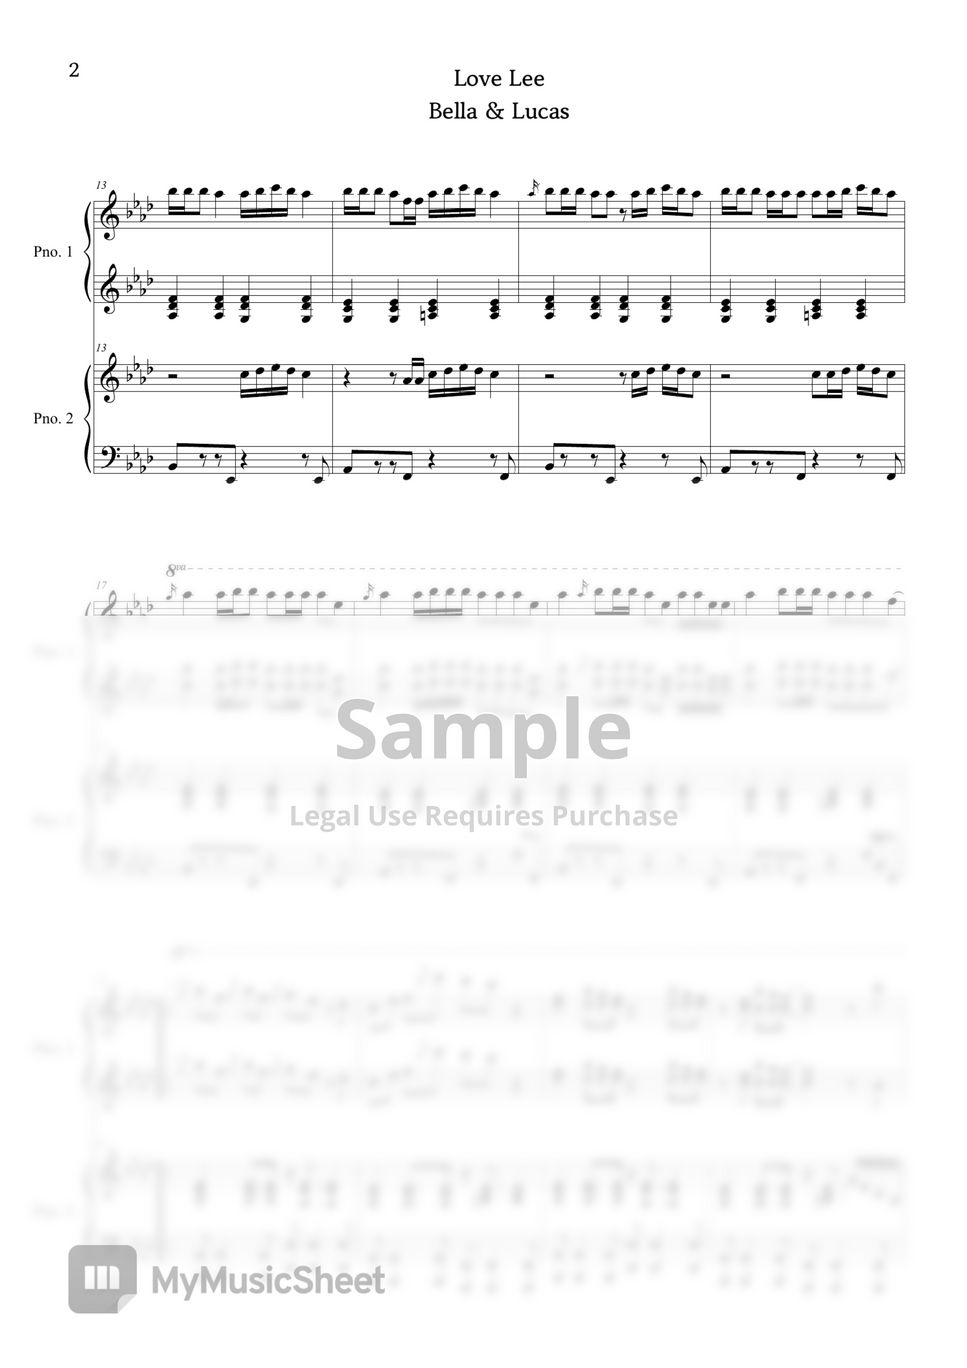 AKMU - Love Lee (4hands piano) Sheets by BELLA&LUCAS